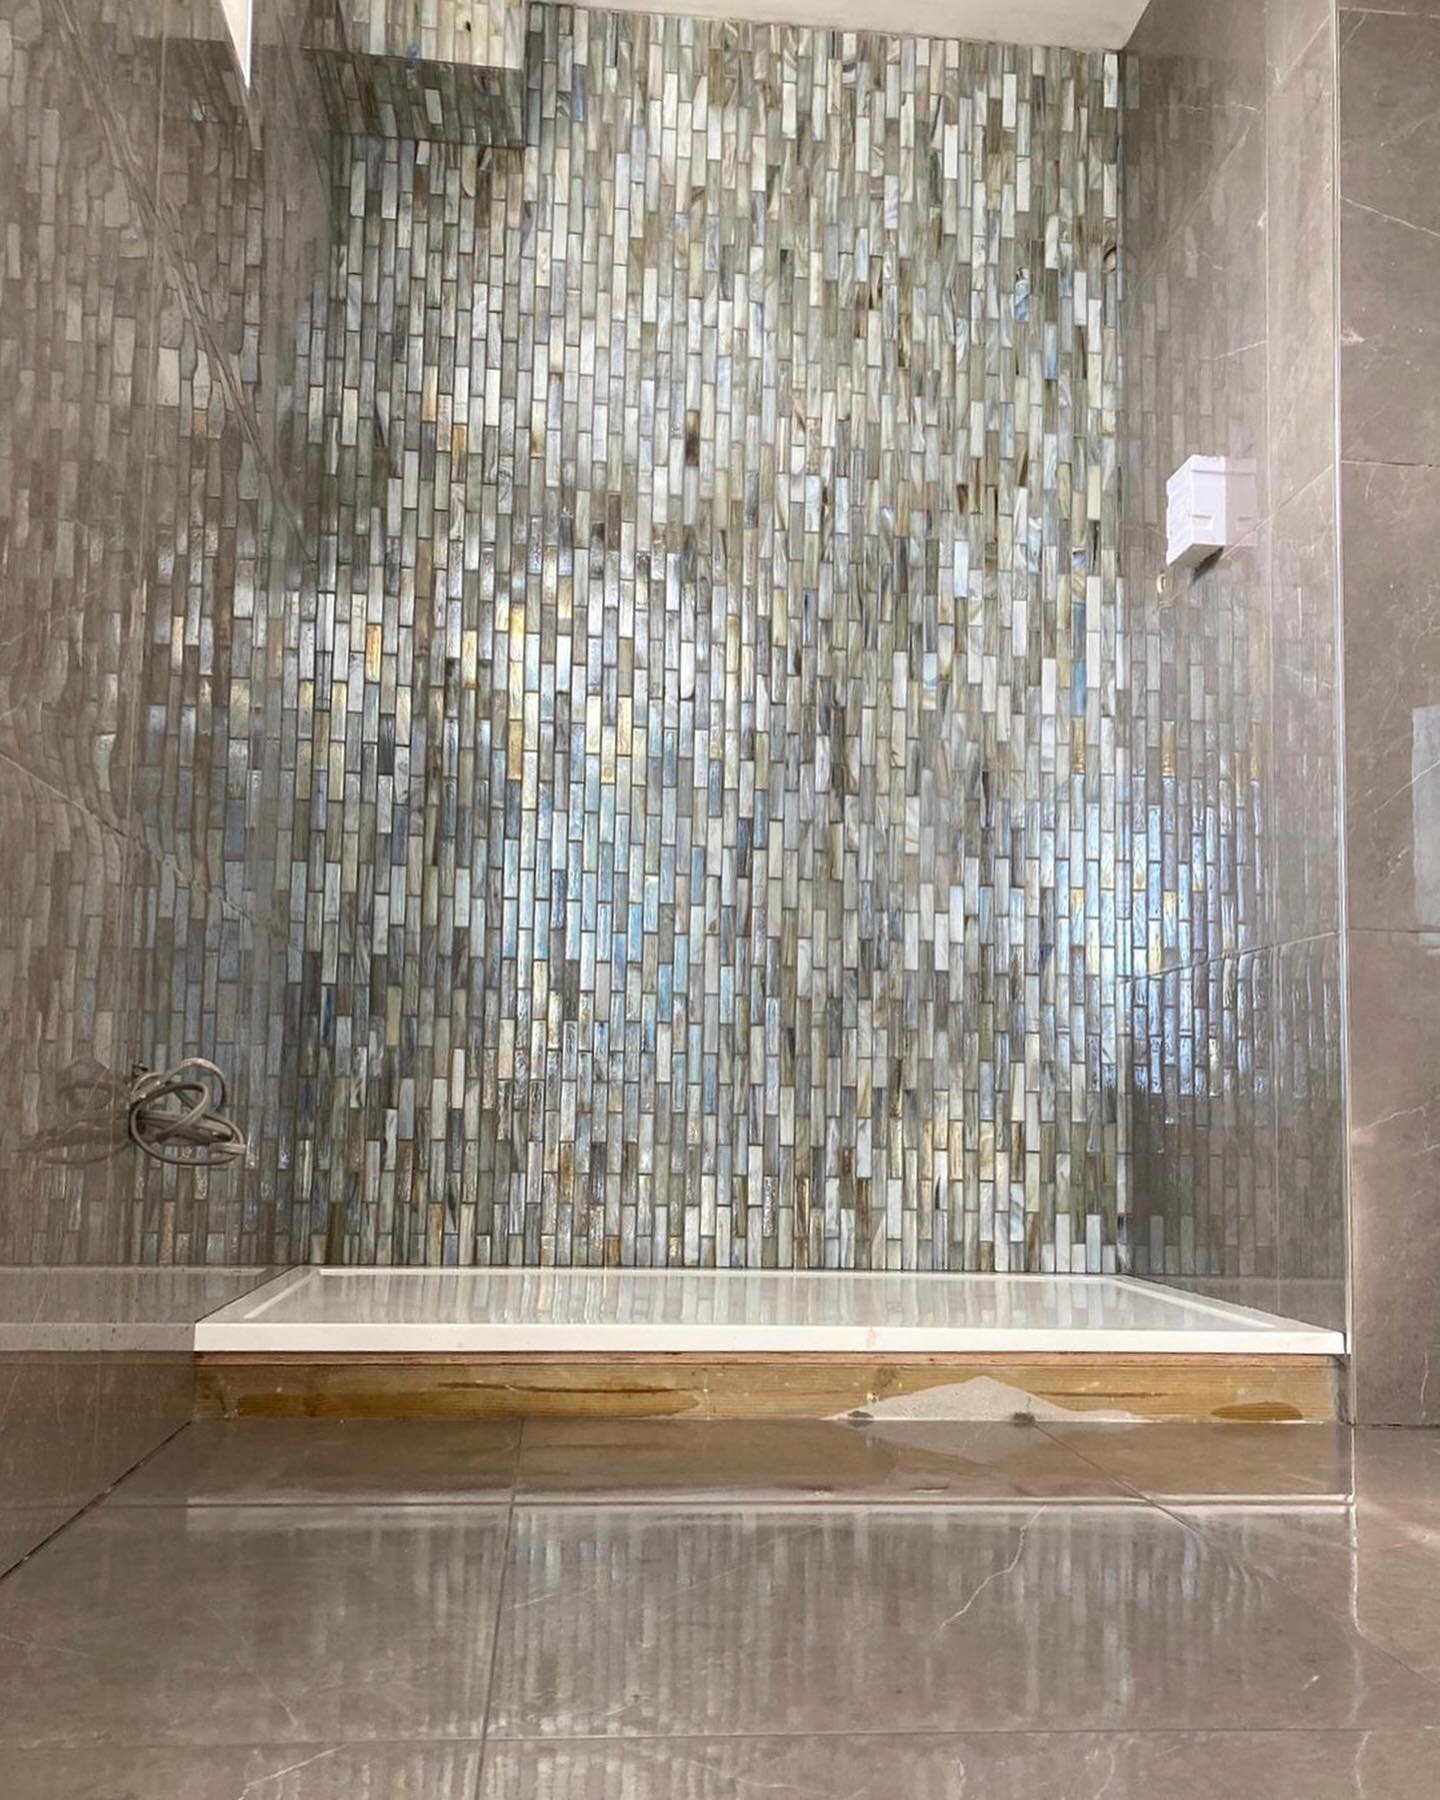 Completed mosaic bathrooms 
.
.
.
.
.
.
#bathroomdesign #bathroom #bathroomdecor #bath #shower #tiling #tiles #tilingwork #craftmanship #design #interiordesign #interior #architecture #interiorarchitecture #interi&oslash;r #living #luxury #luxuryhome